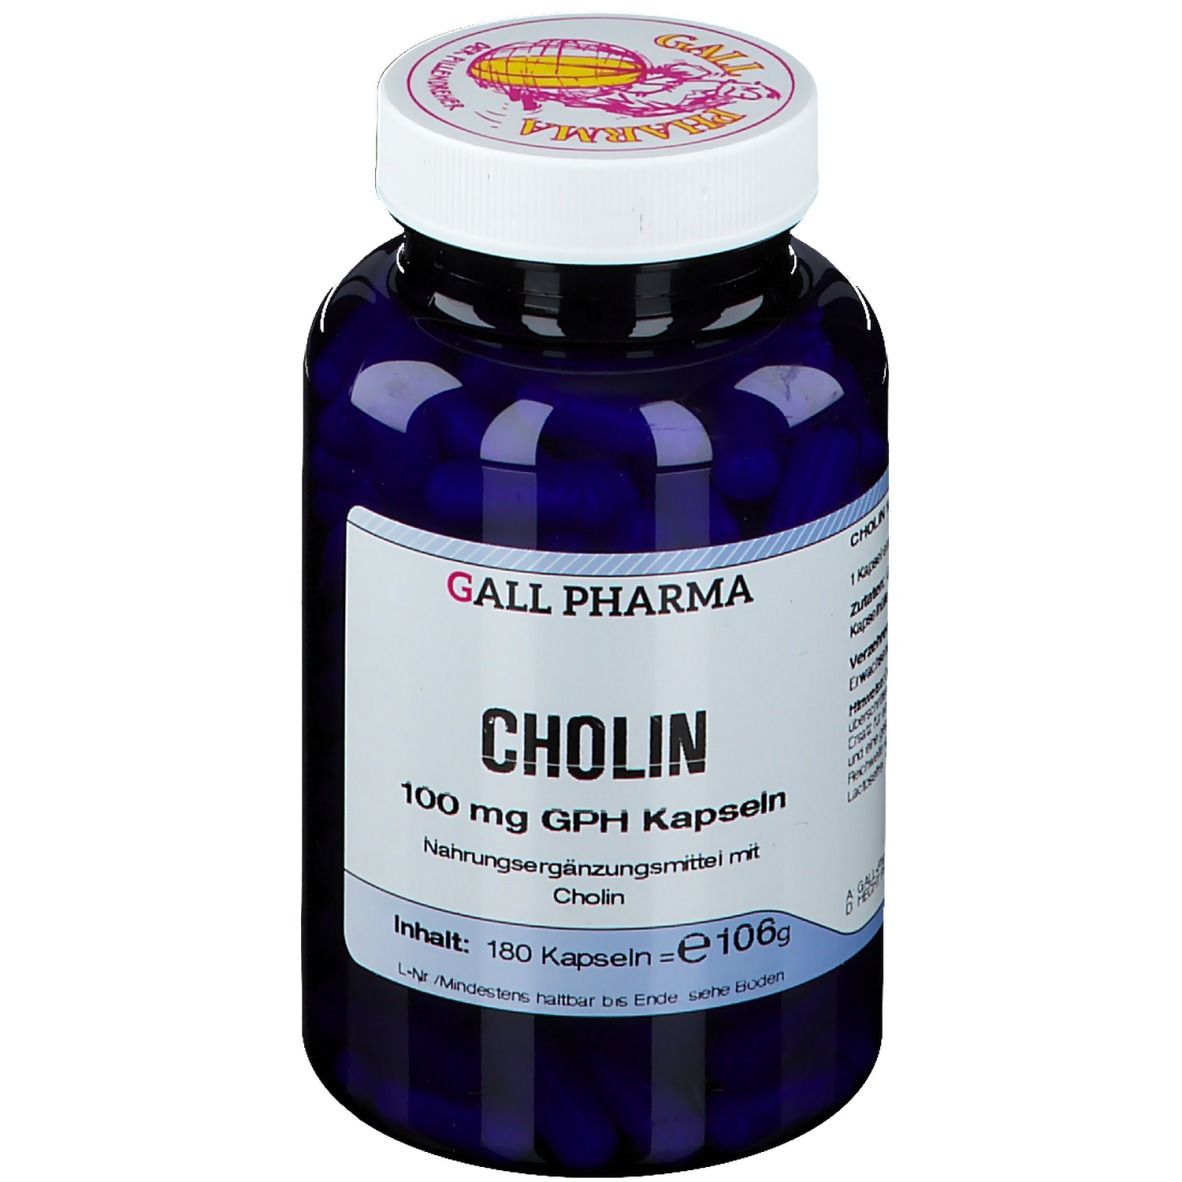 Gall Pharma Cholin 100 mg GPH Kapseln